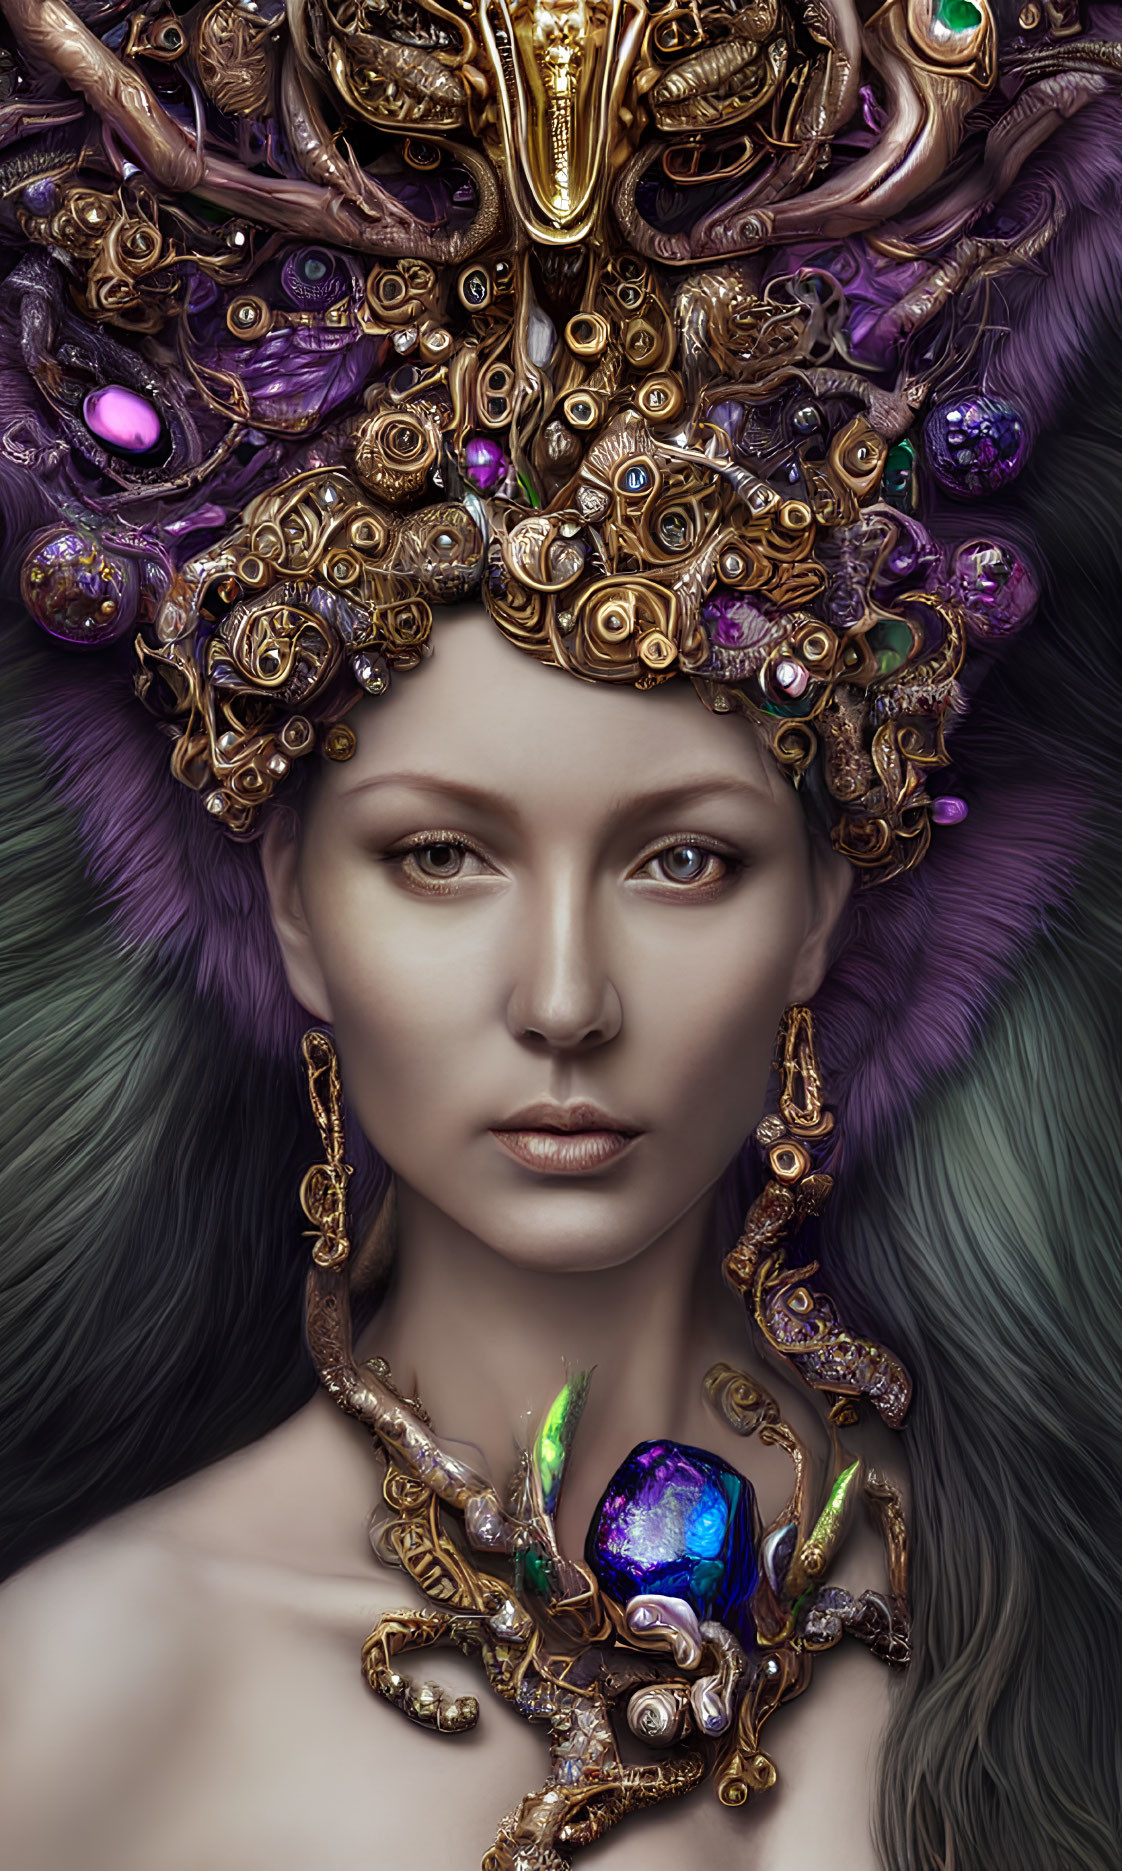 Intricate golden headdress with gemstones and serpentine elements